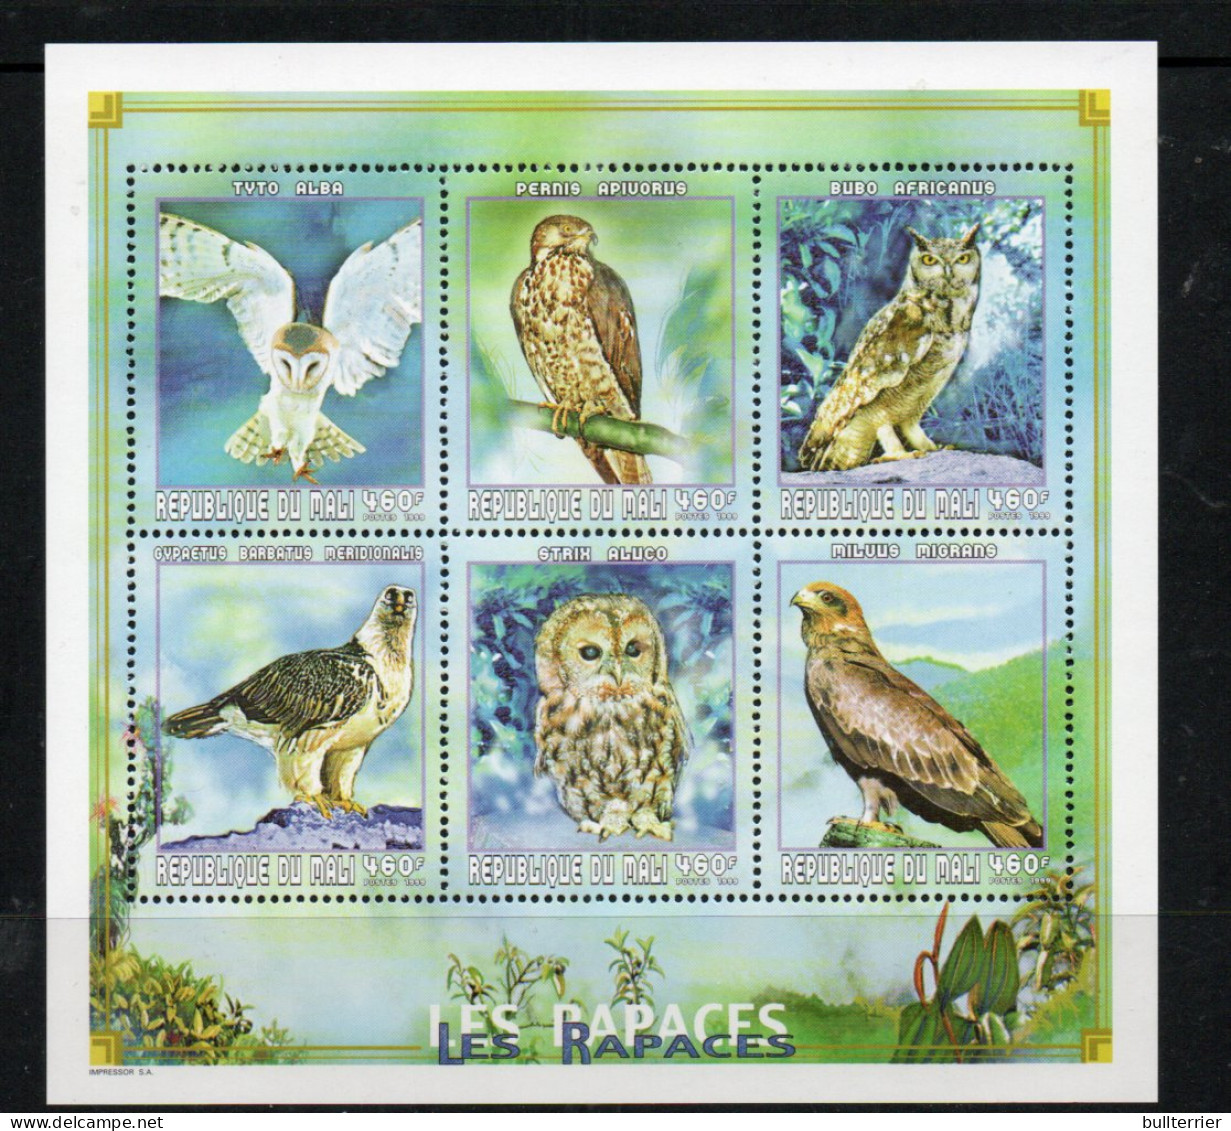 BIRDS - MALI -  1999 -BIRDS OF PREY  SHEETLET OF 6   MINT NEVER HINGED, - Duiven En Duifachtigen